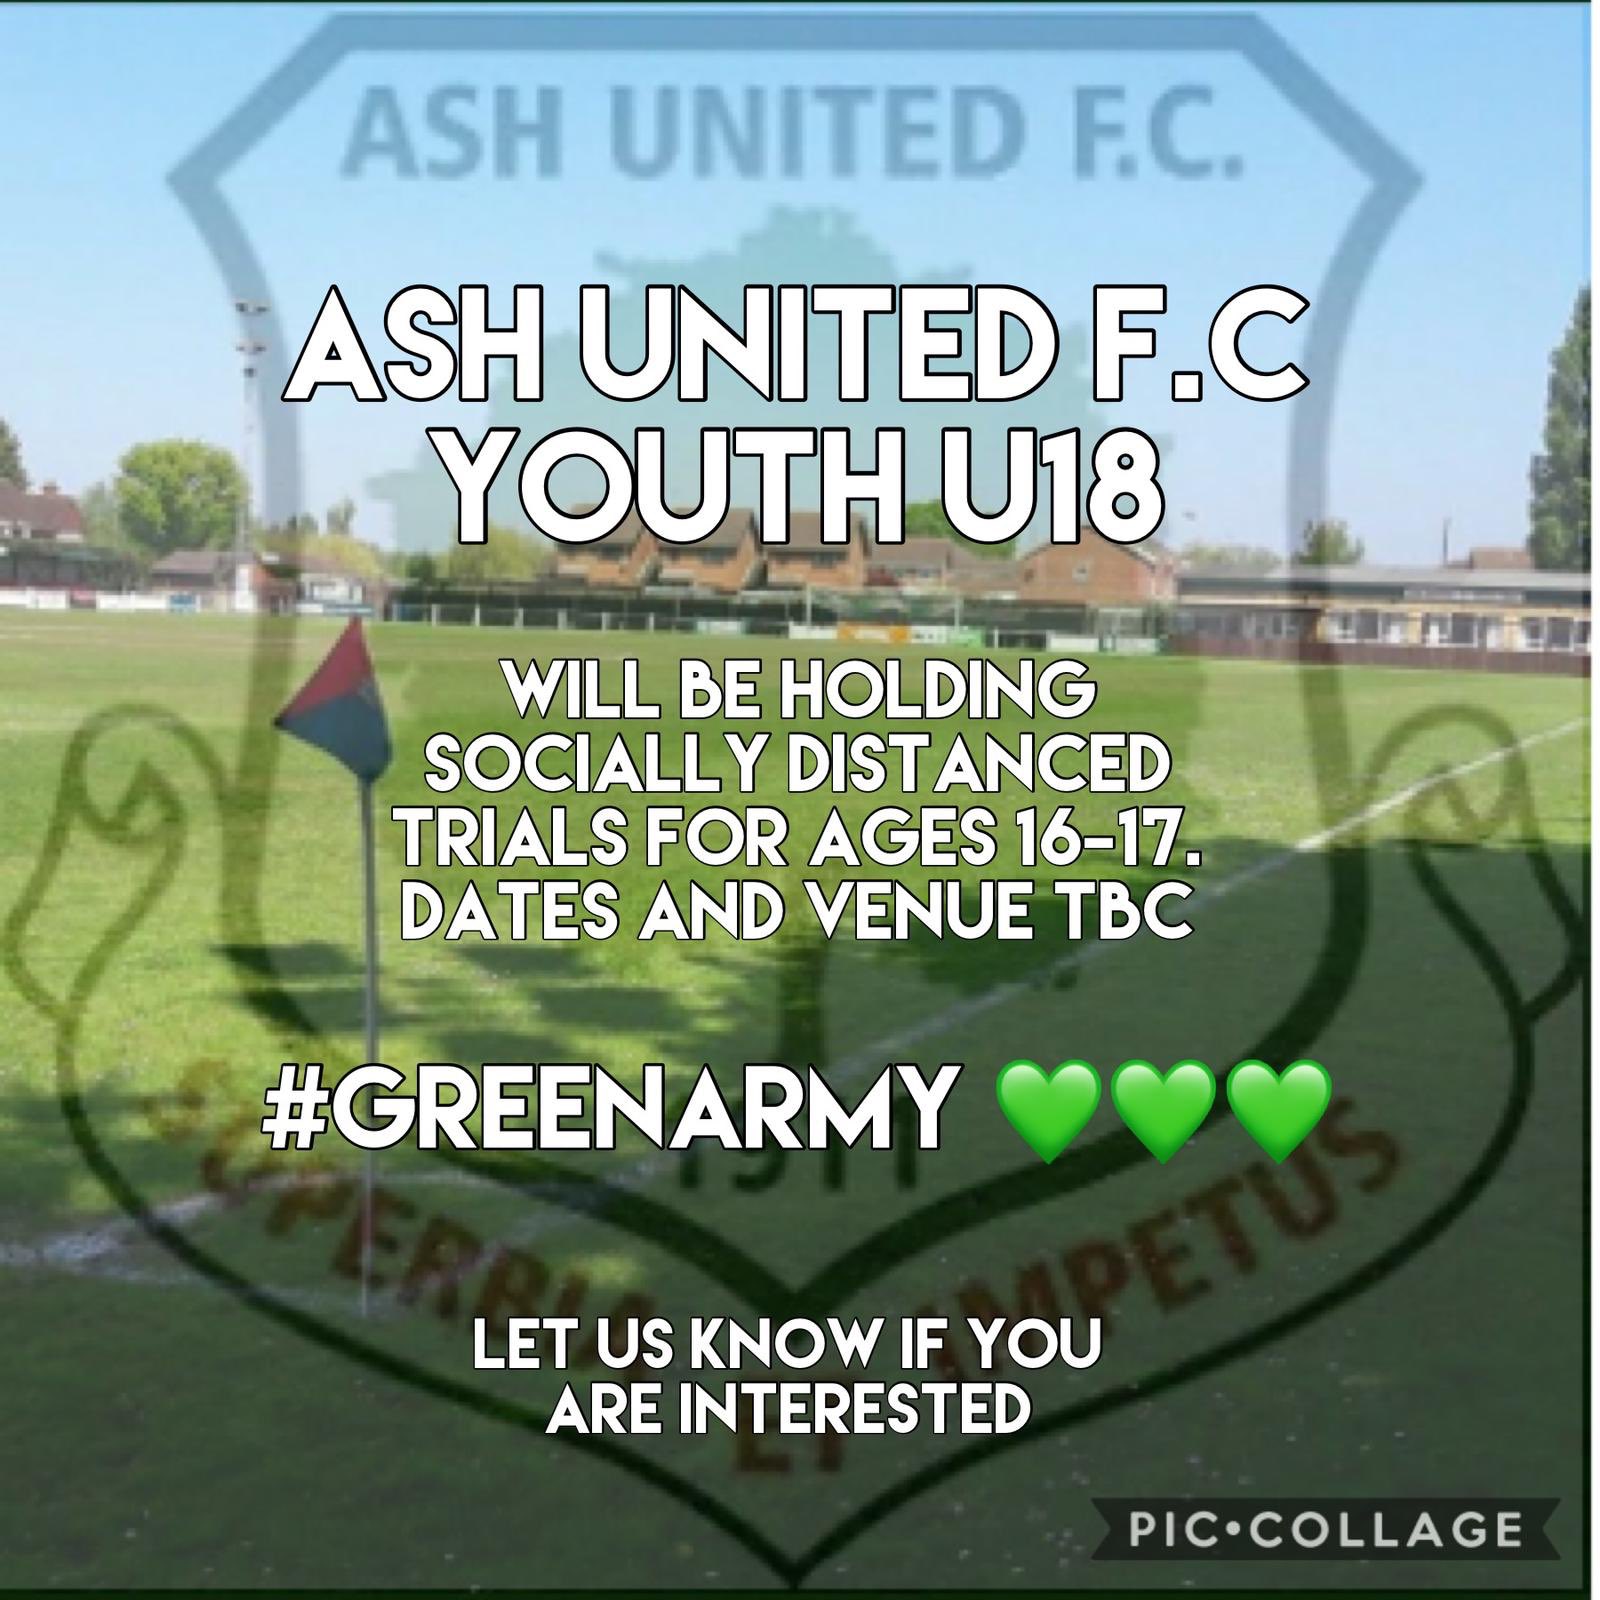 Ash United FC on Twitter: "Getting ready for 2020/21 season ð If